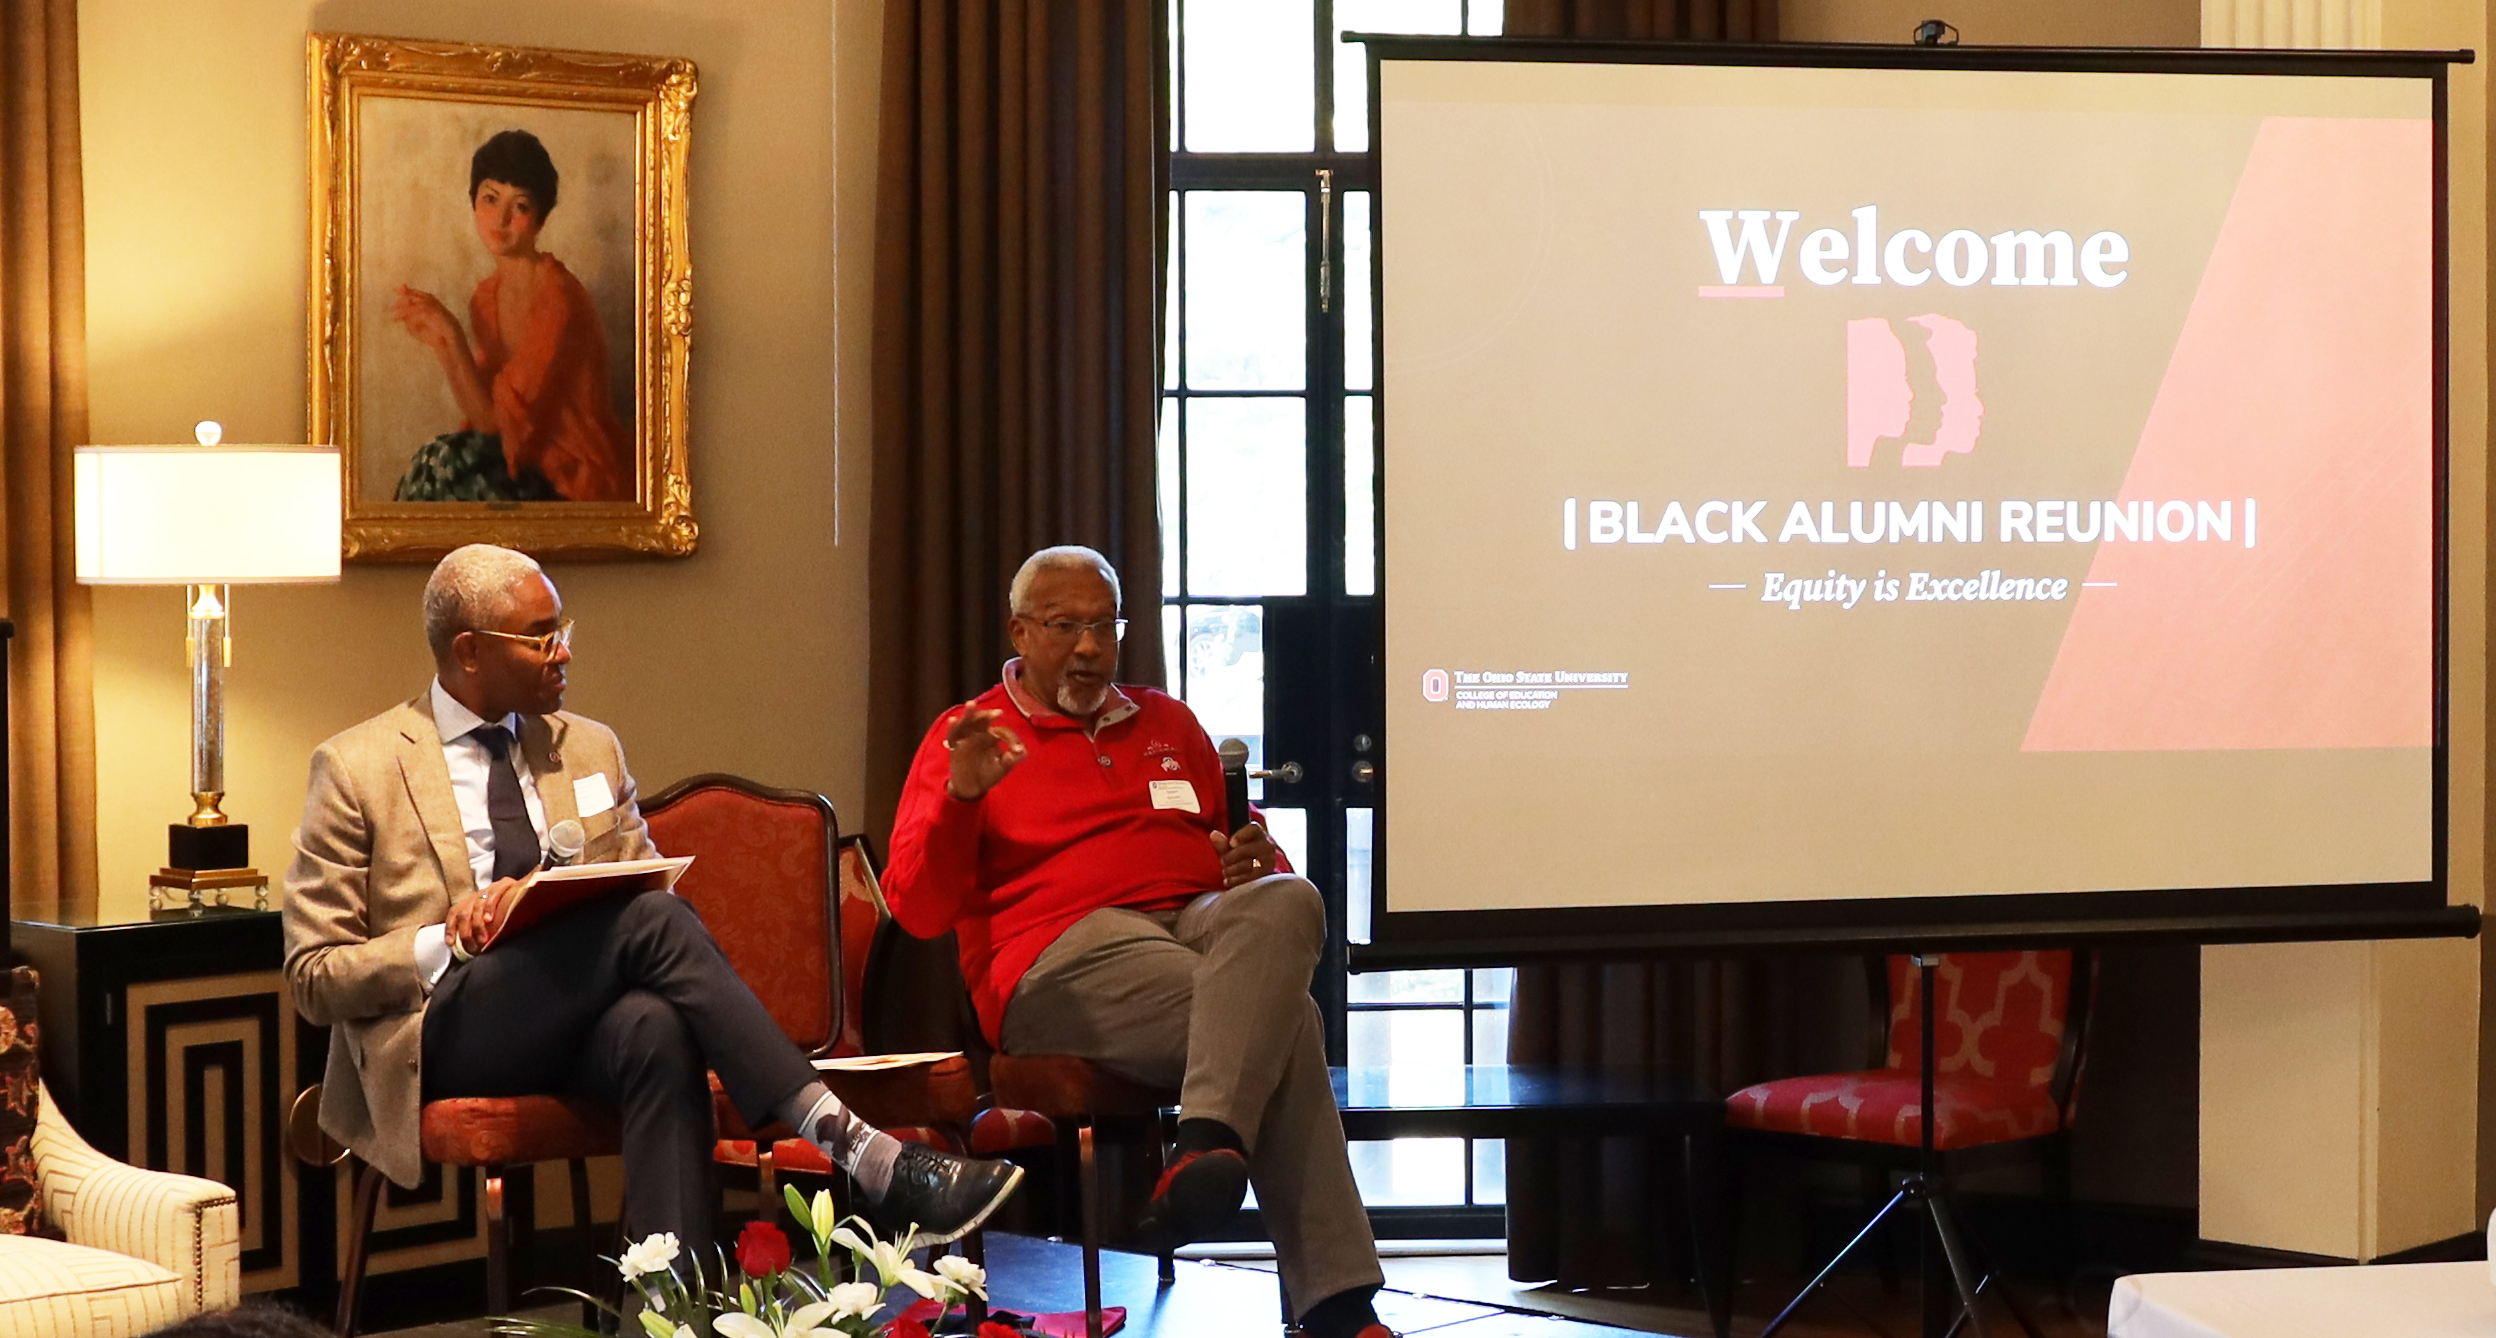 Speakers at the Ohio State Black Alumni Reunion